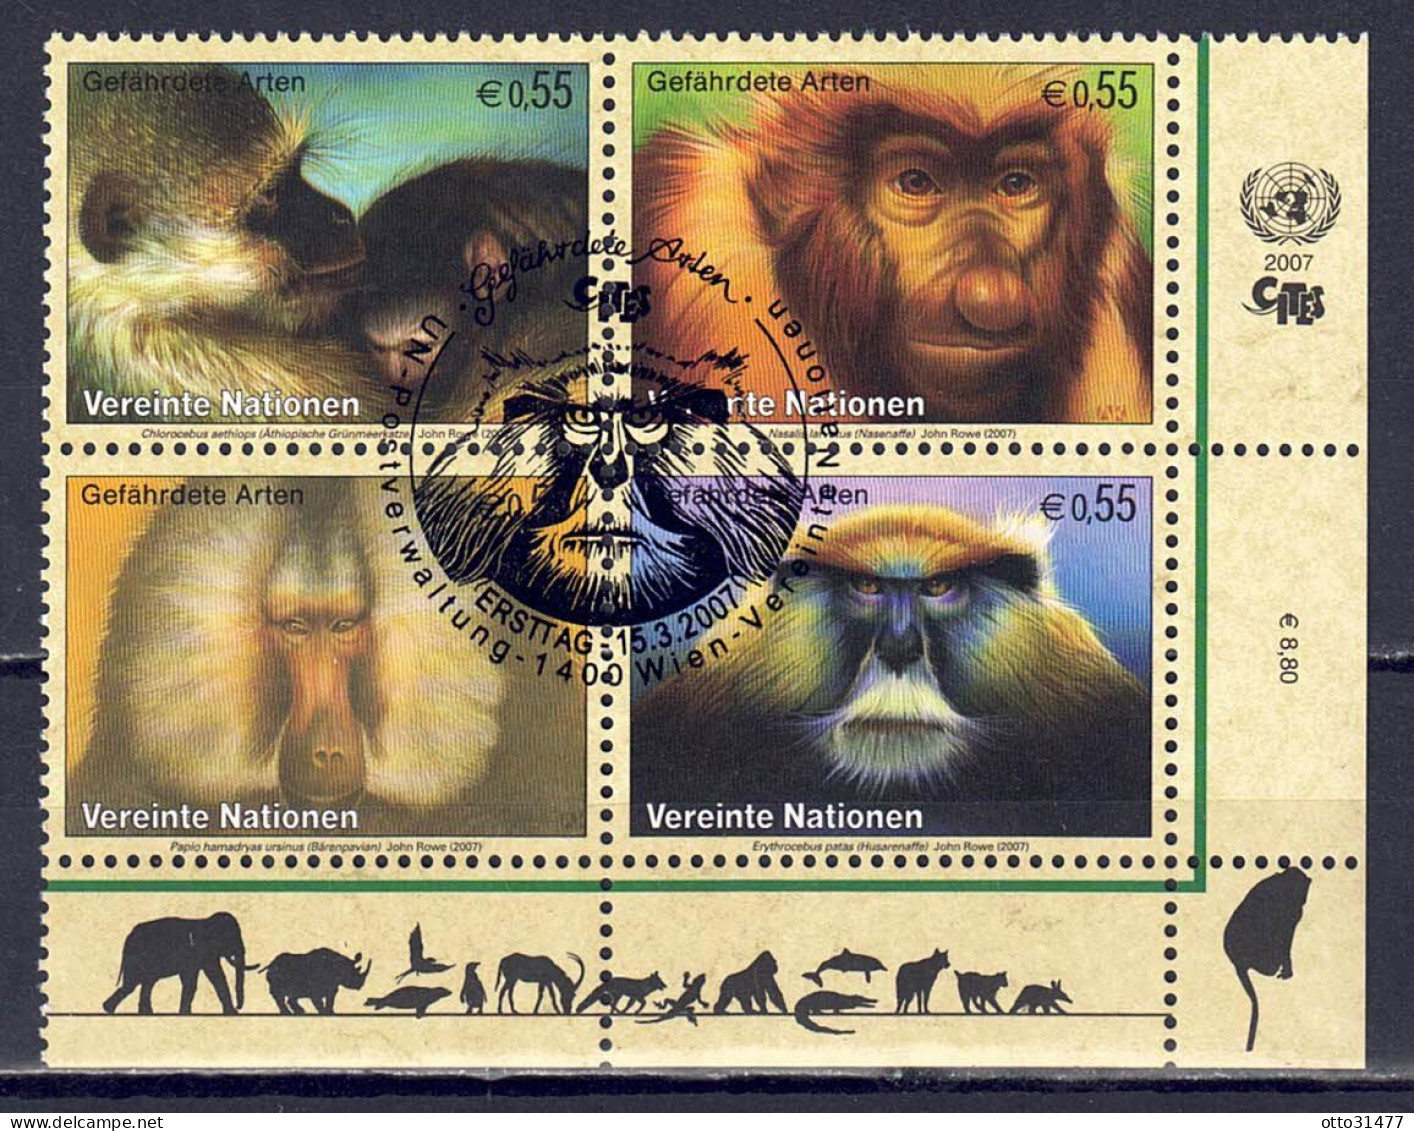 UNO Wien 2007 - Gefährdete Arten (XV) - Primaten, Nr. 485 - 488 Zd., Gestempelt / Used - Used Stamps